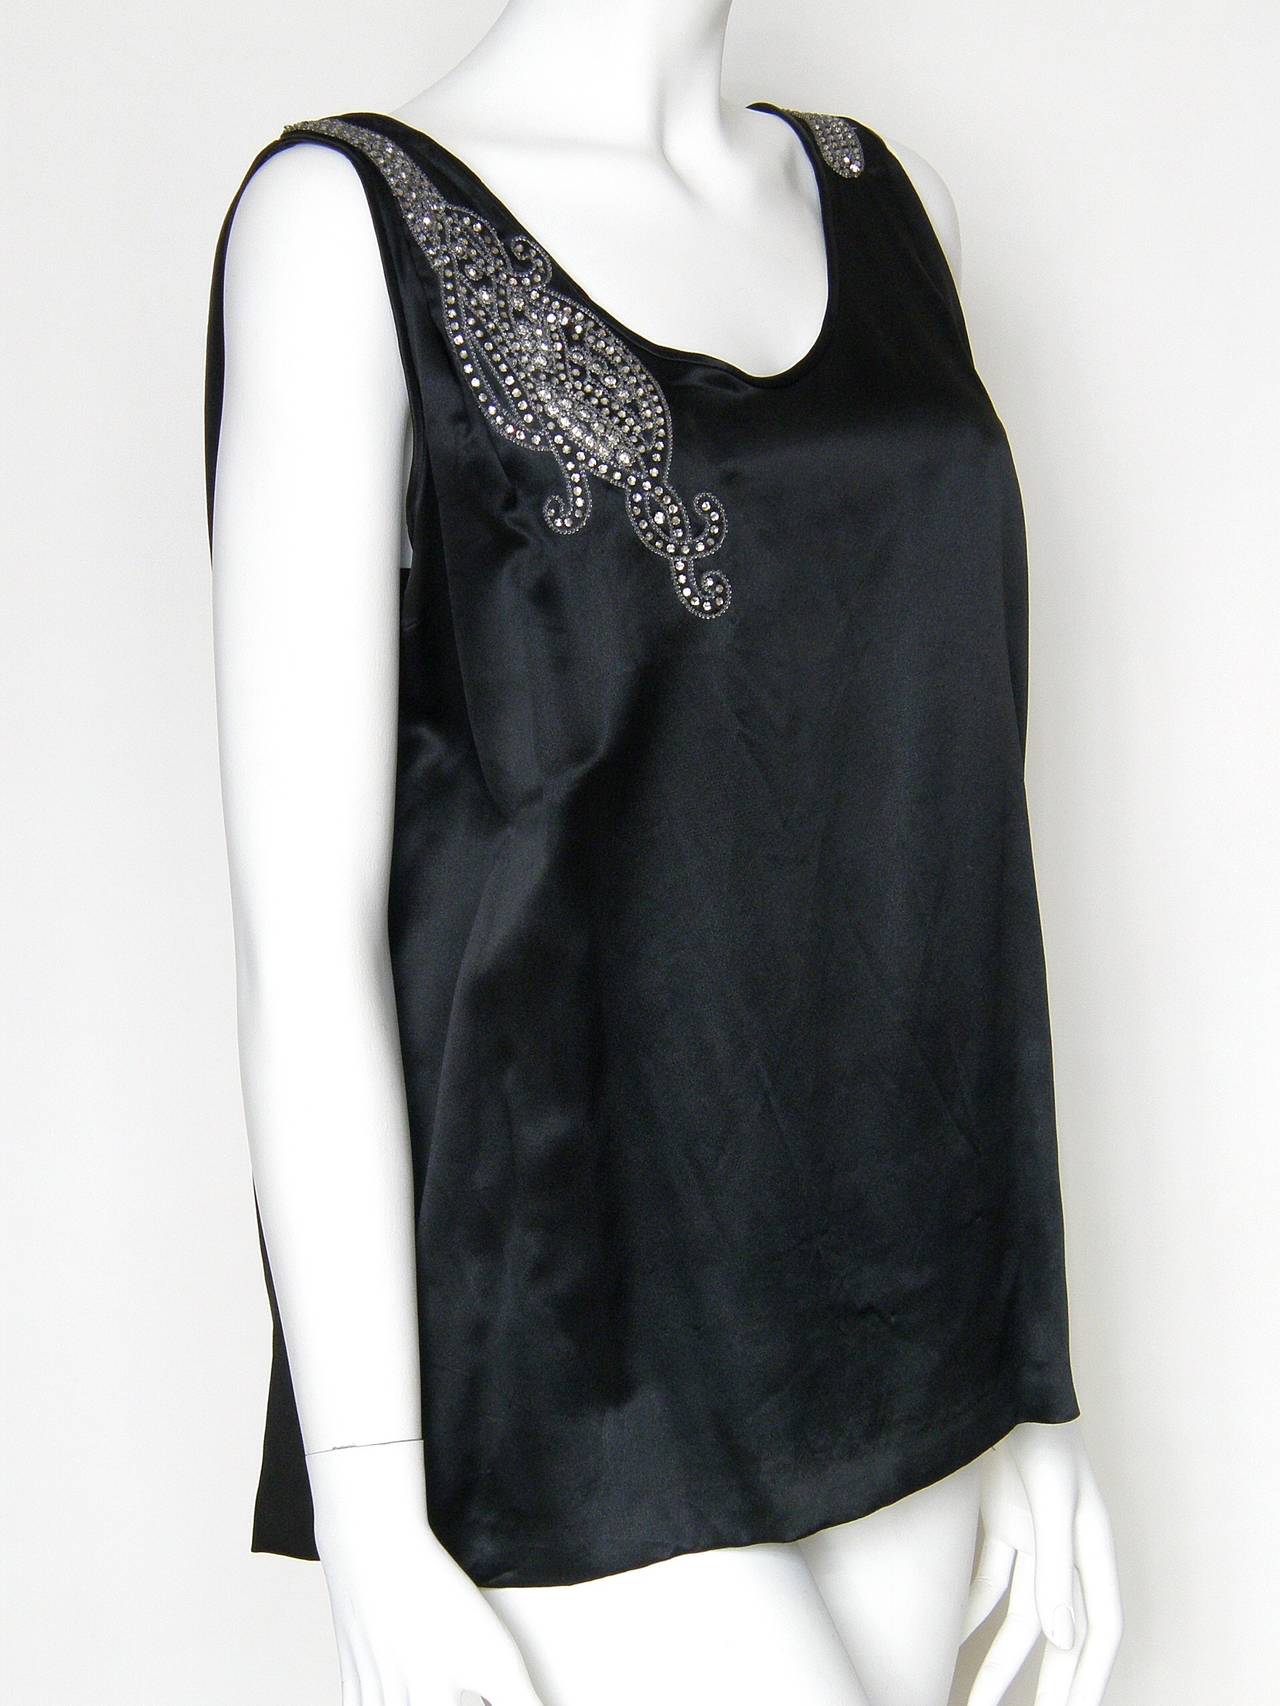 Elegant black sleeveless evening blouse with a deep 